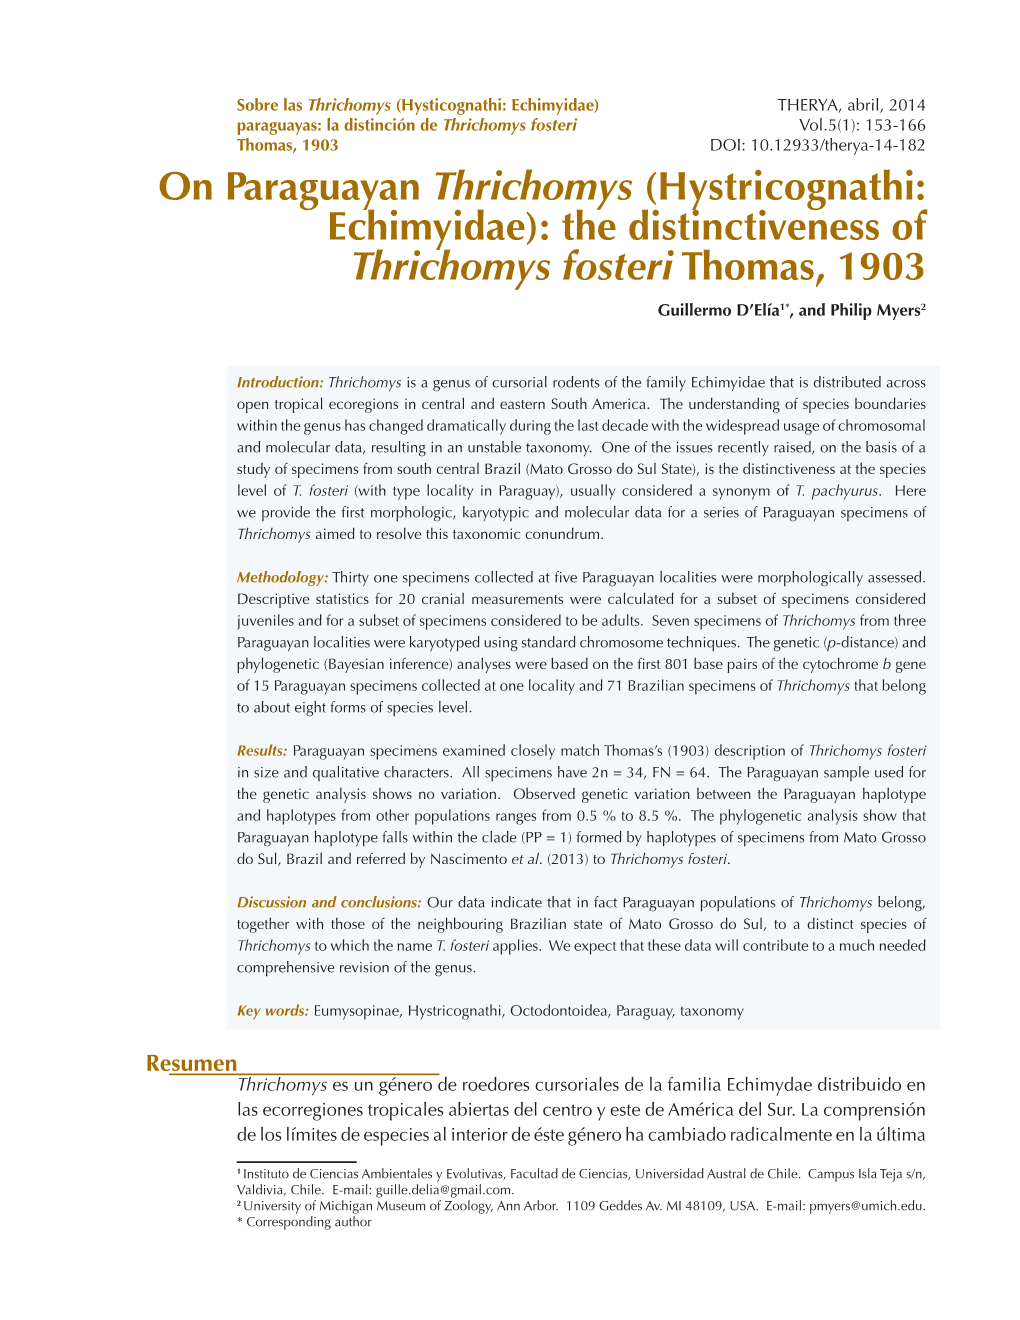 On Paraguayan Thrichomys (Hystricognathi: Echimyidae): the Distinctiveness of Thrichomys Fosteri Thomas, 1903 Guillermo D’Elía1*, and Philip Myers2